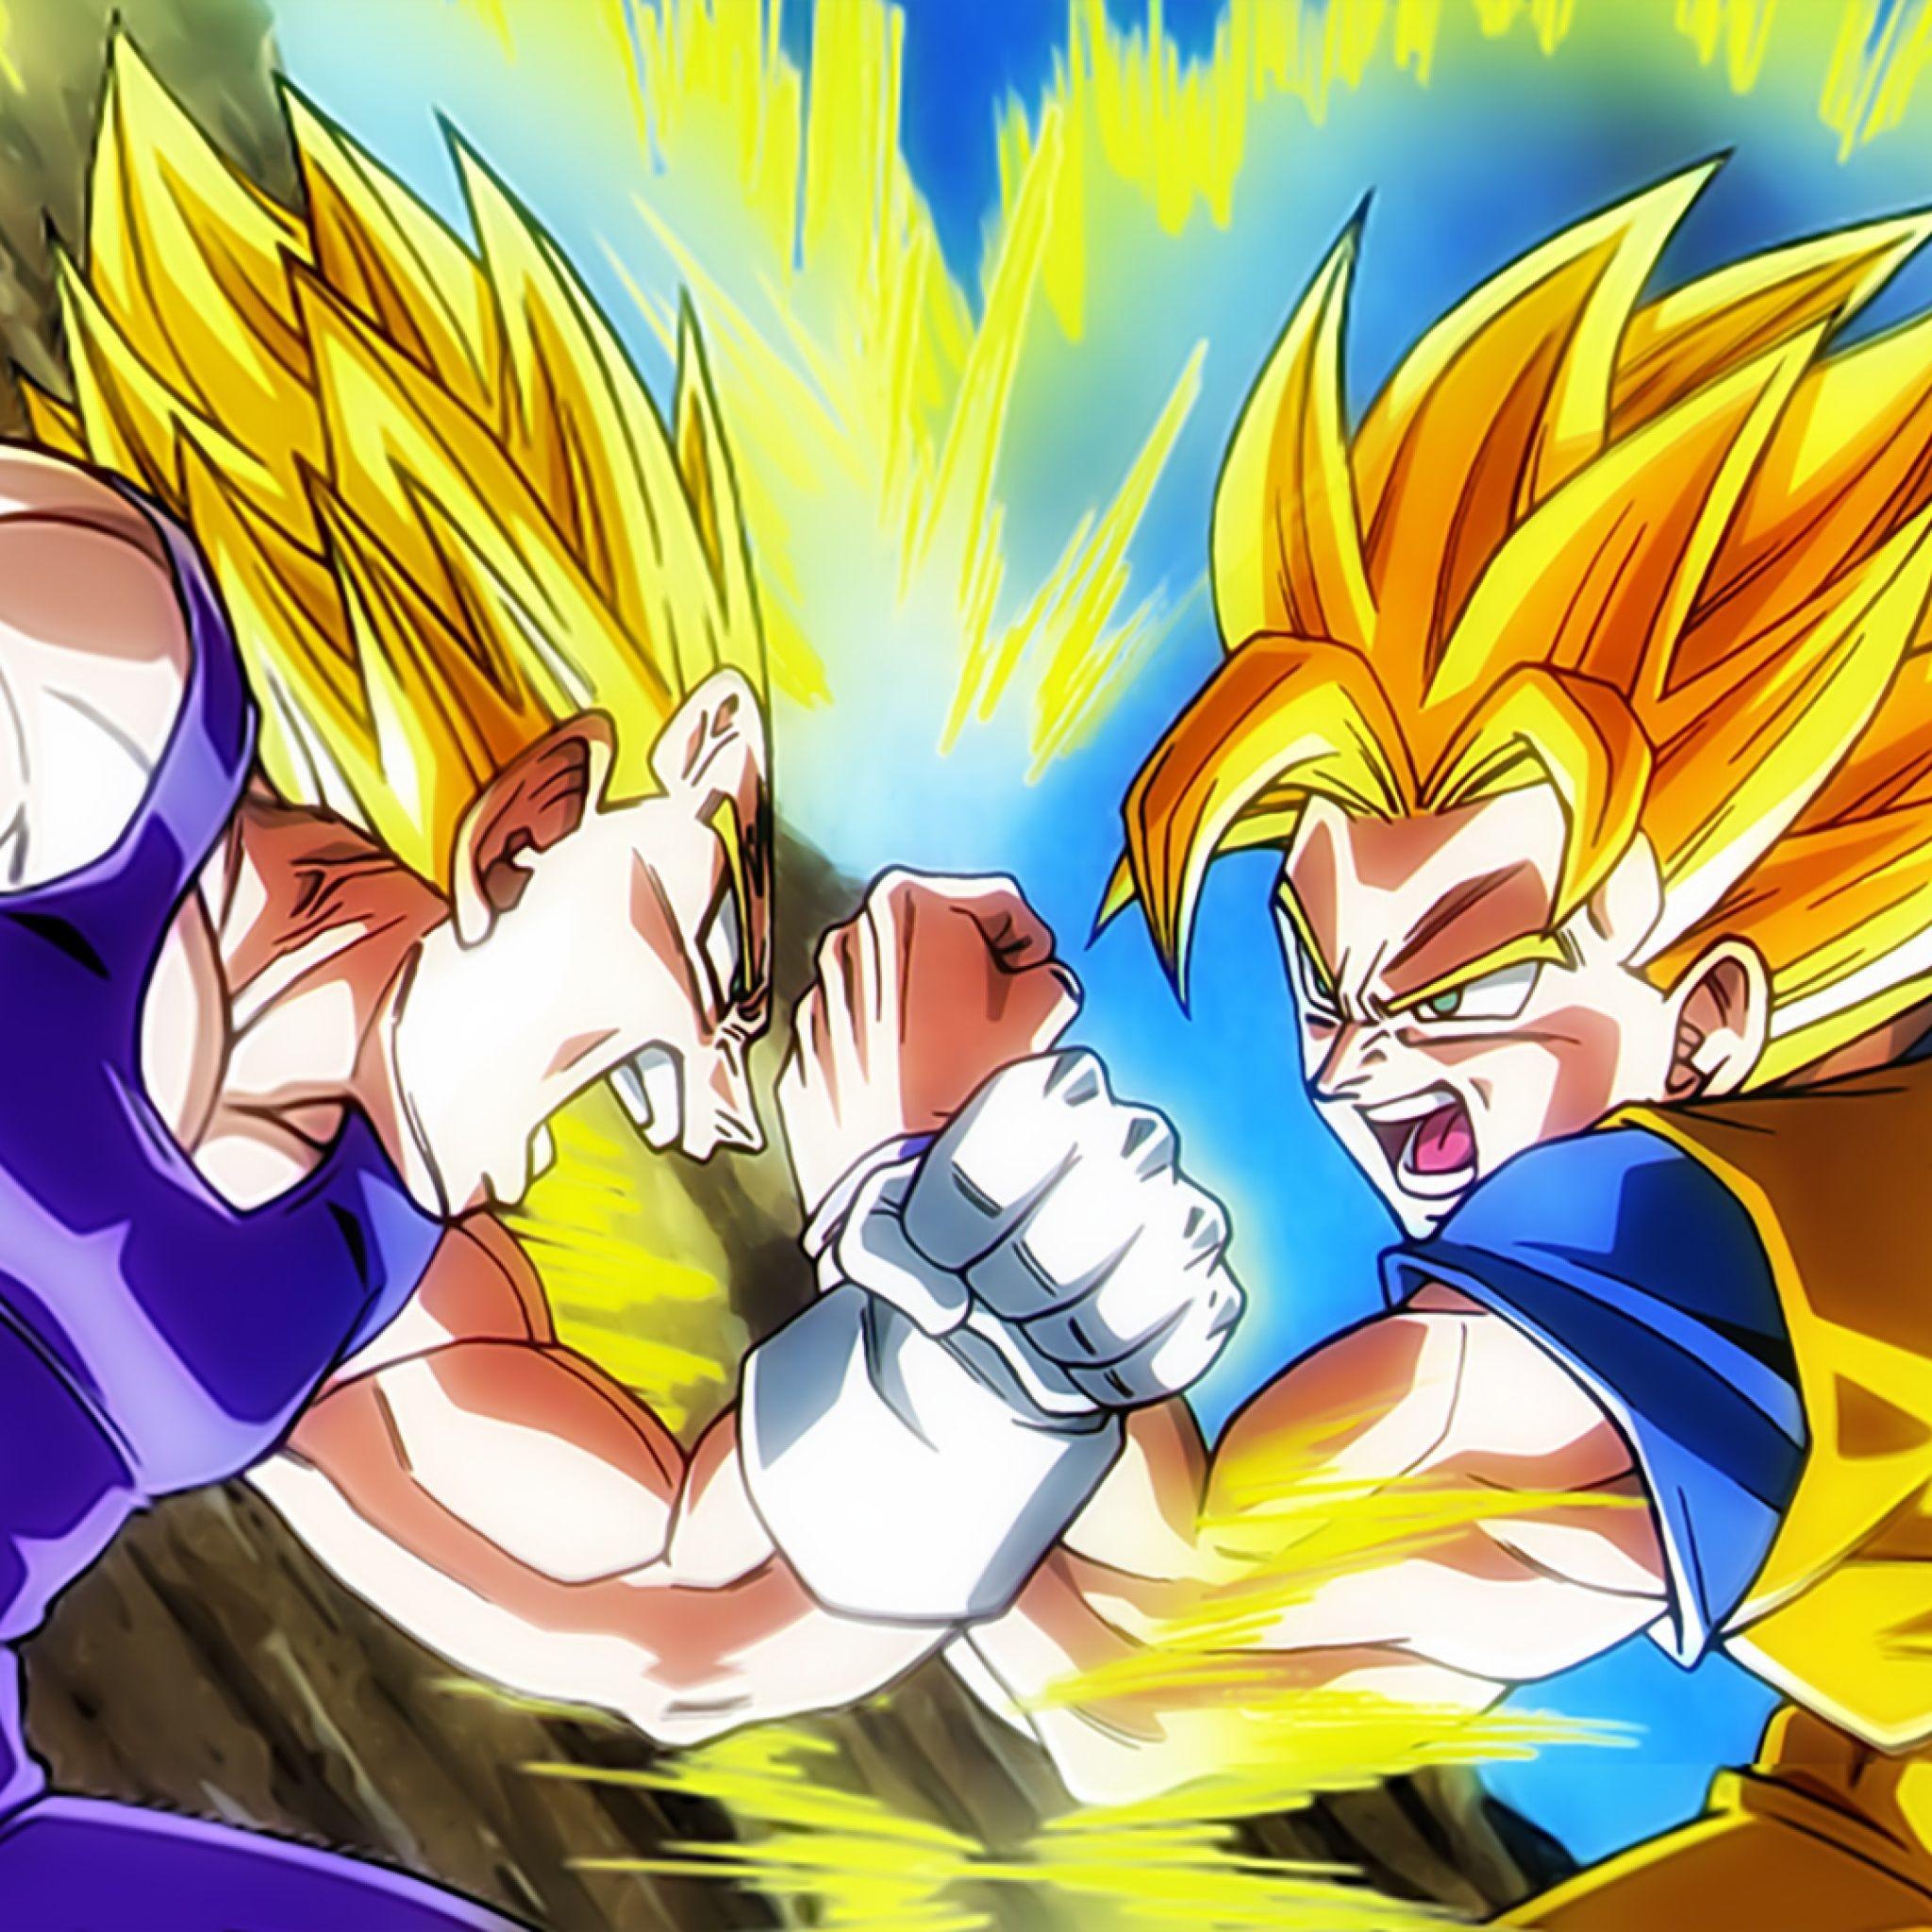 Goku Super Saiyan 3 Wallpaper background picture